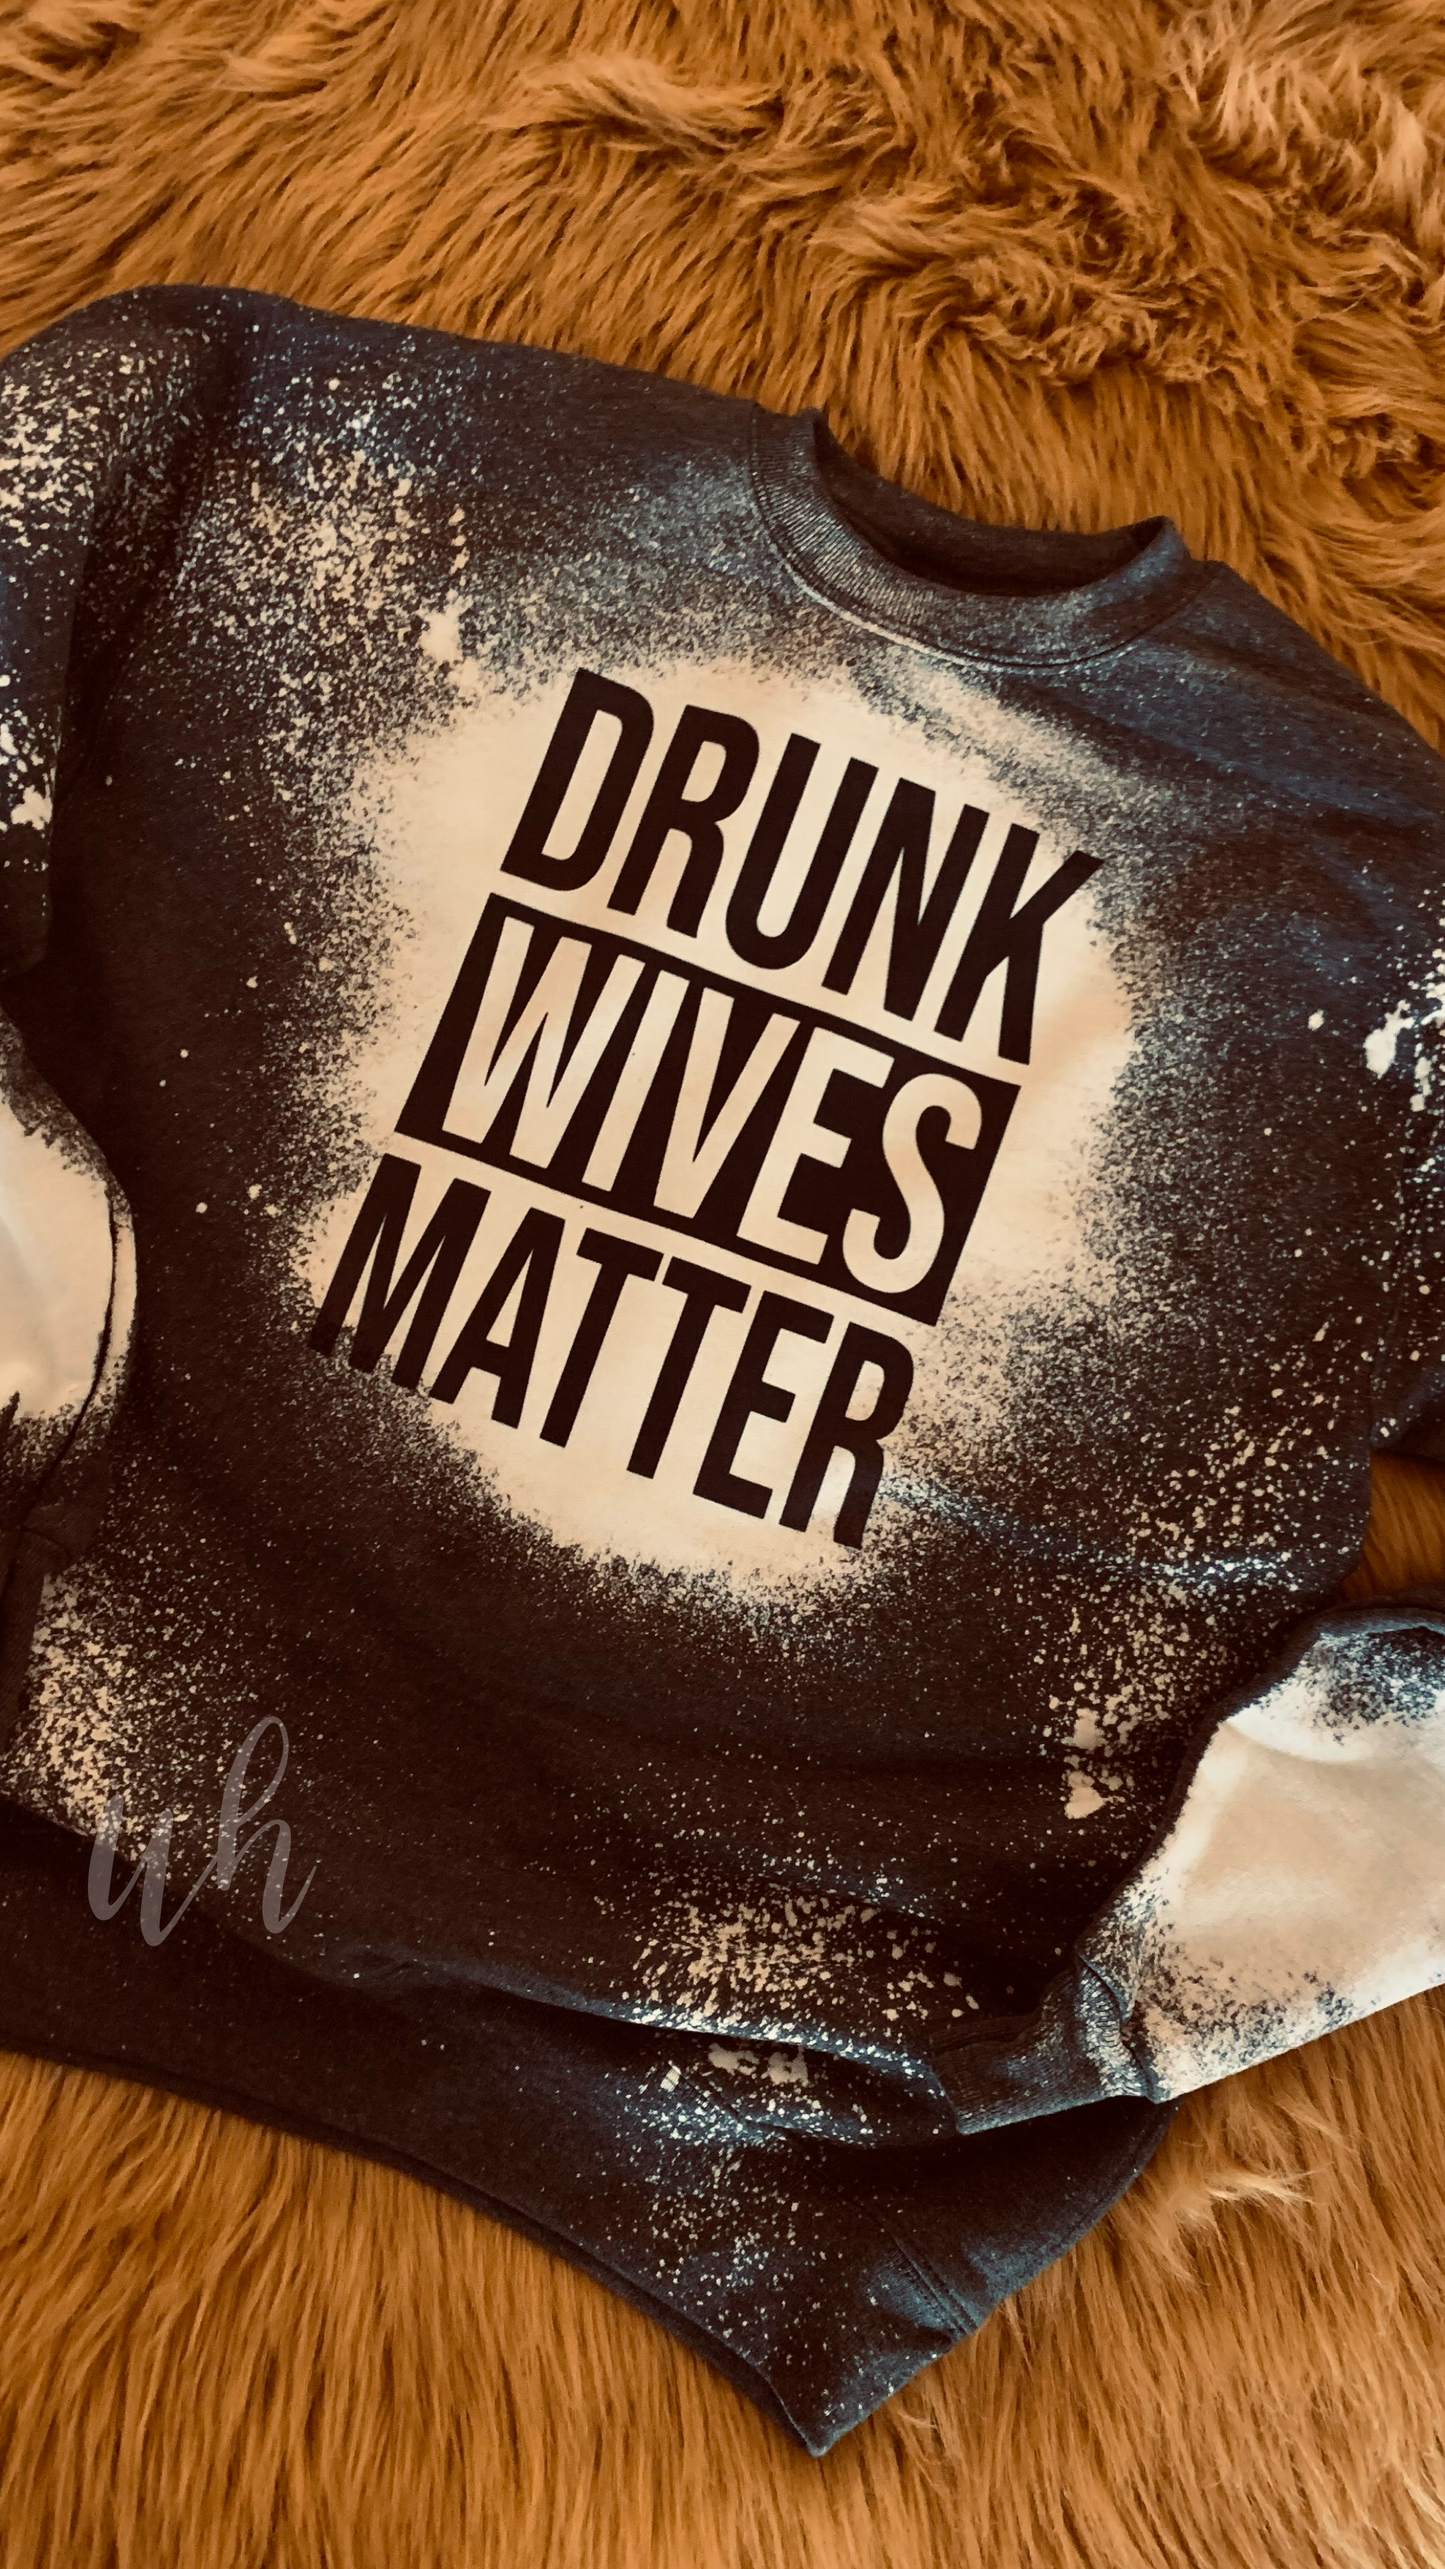 Drunk Wives Matter ~ Distressed Sweatshirt